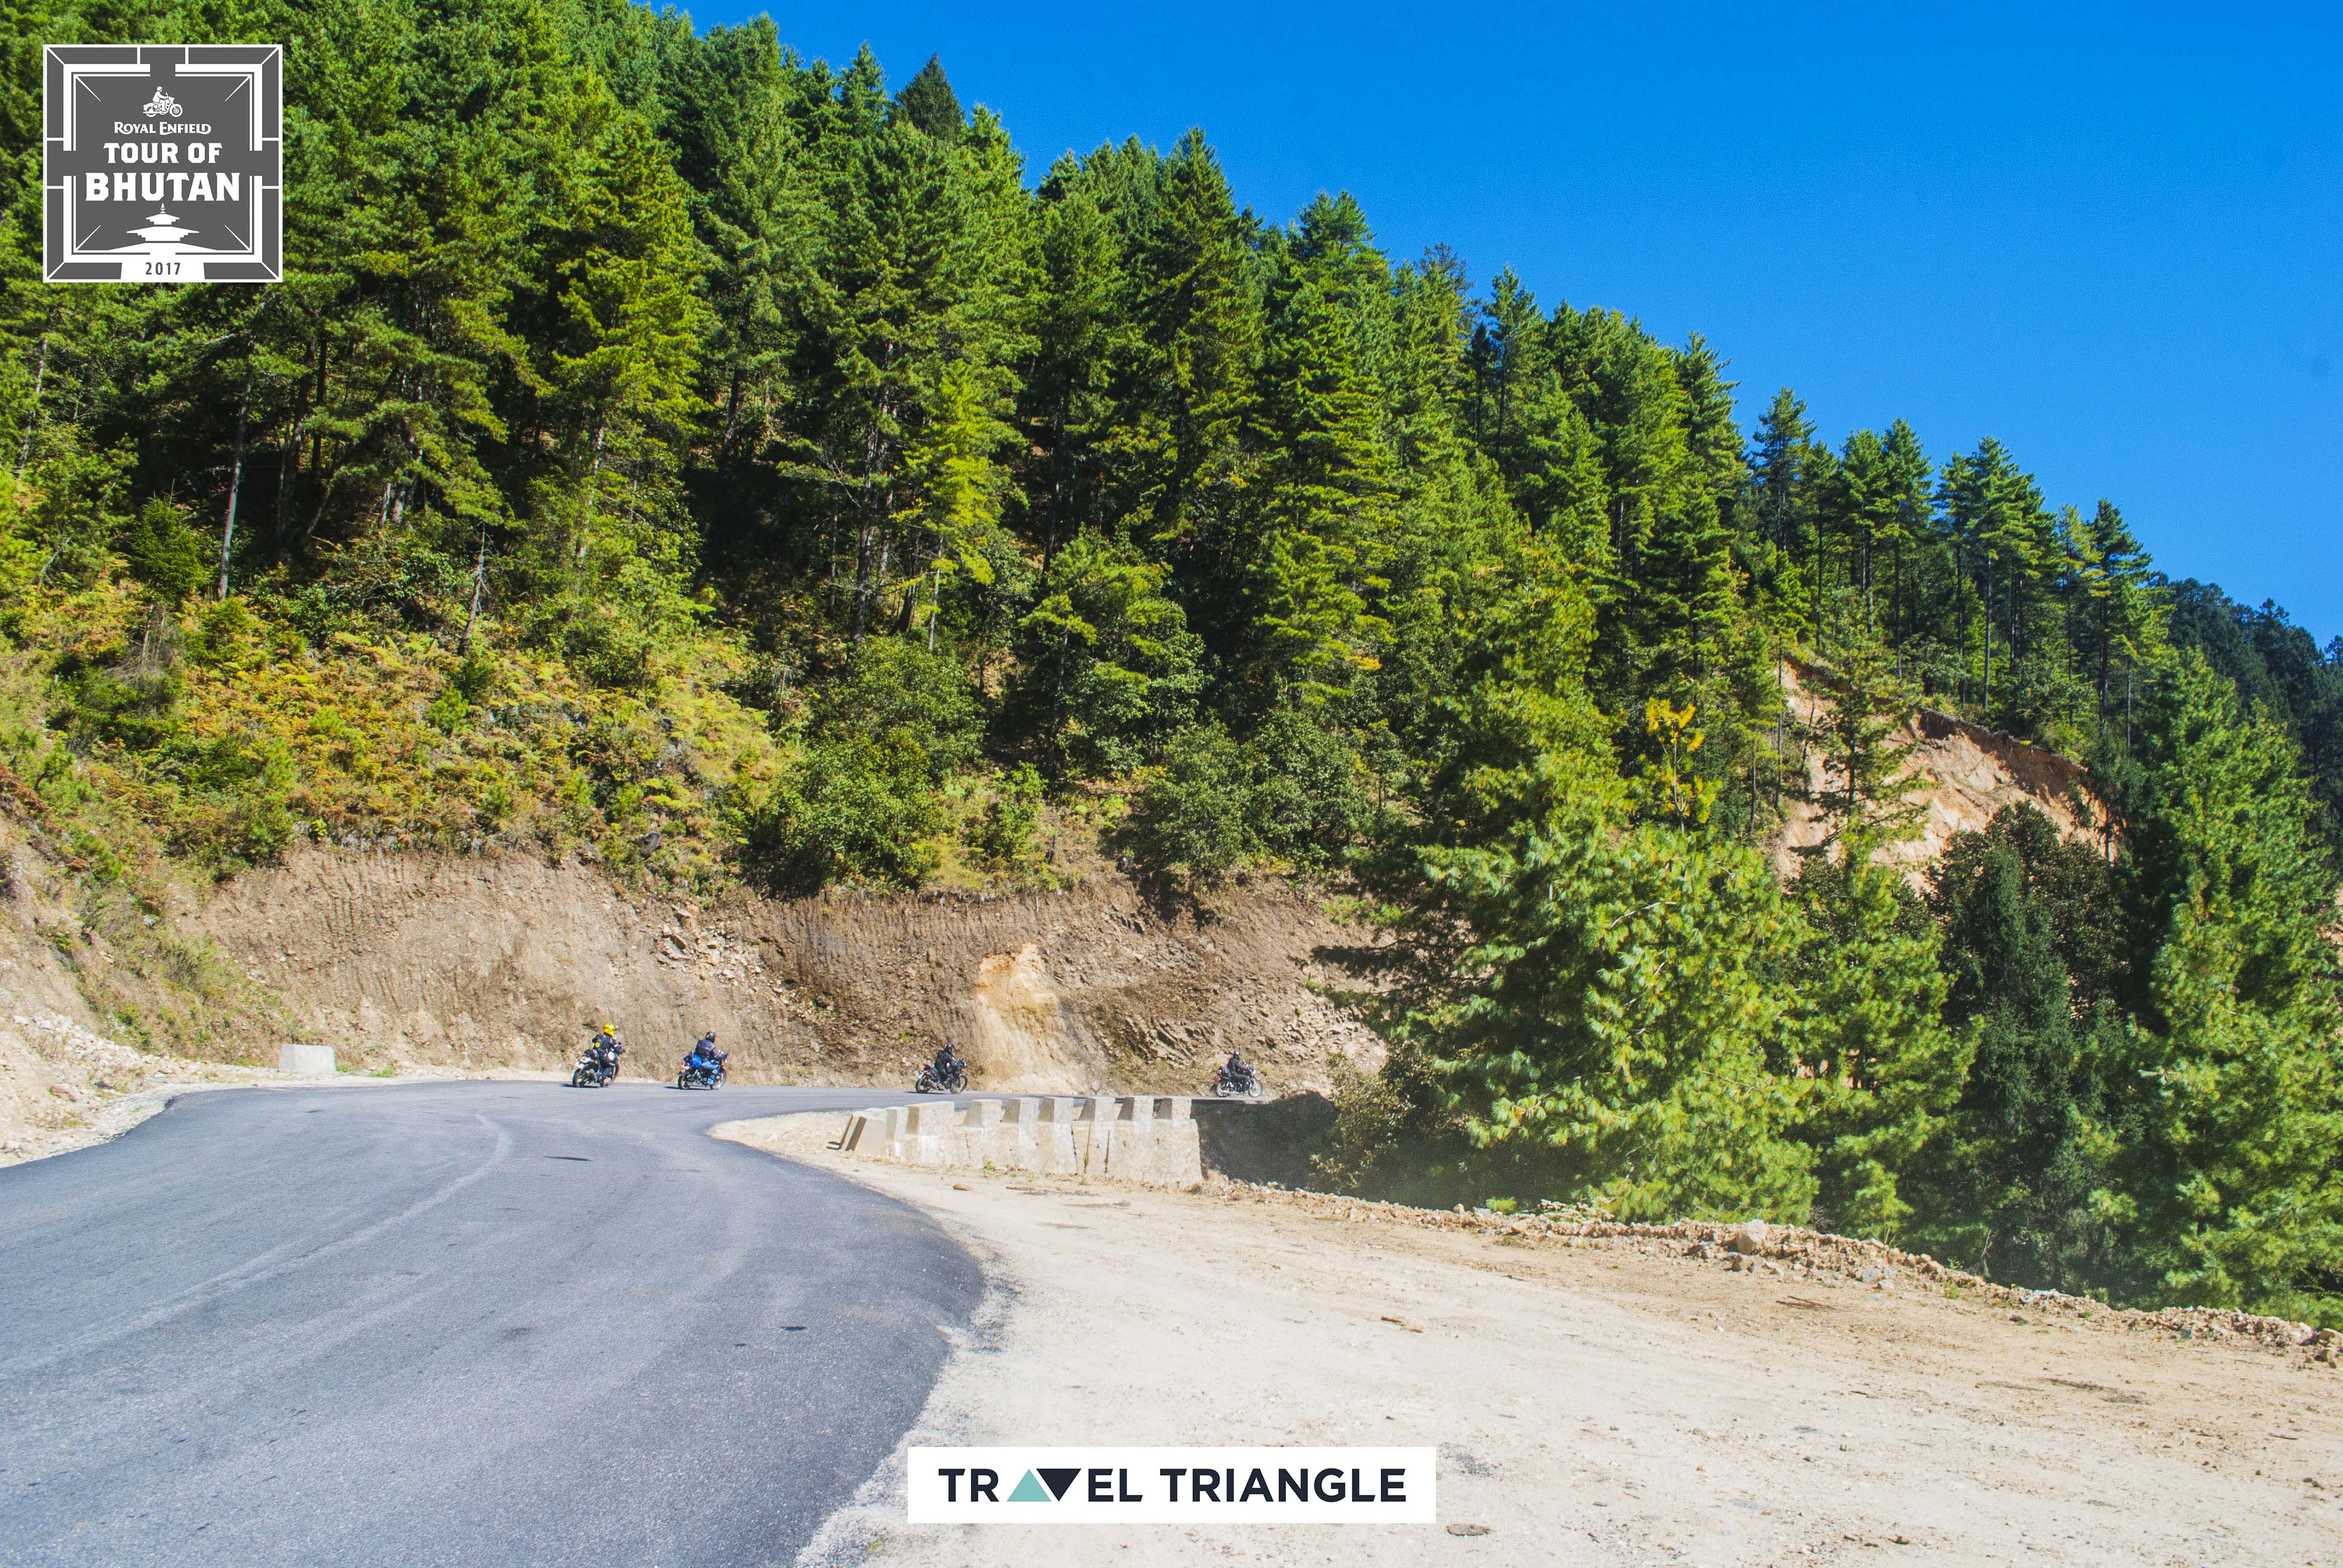 Thimphu to Punakha: the route